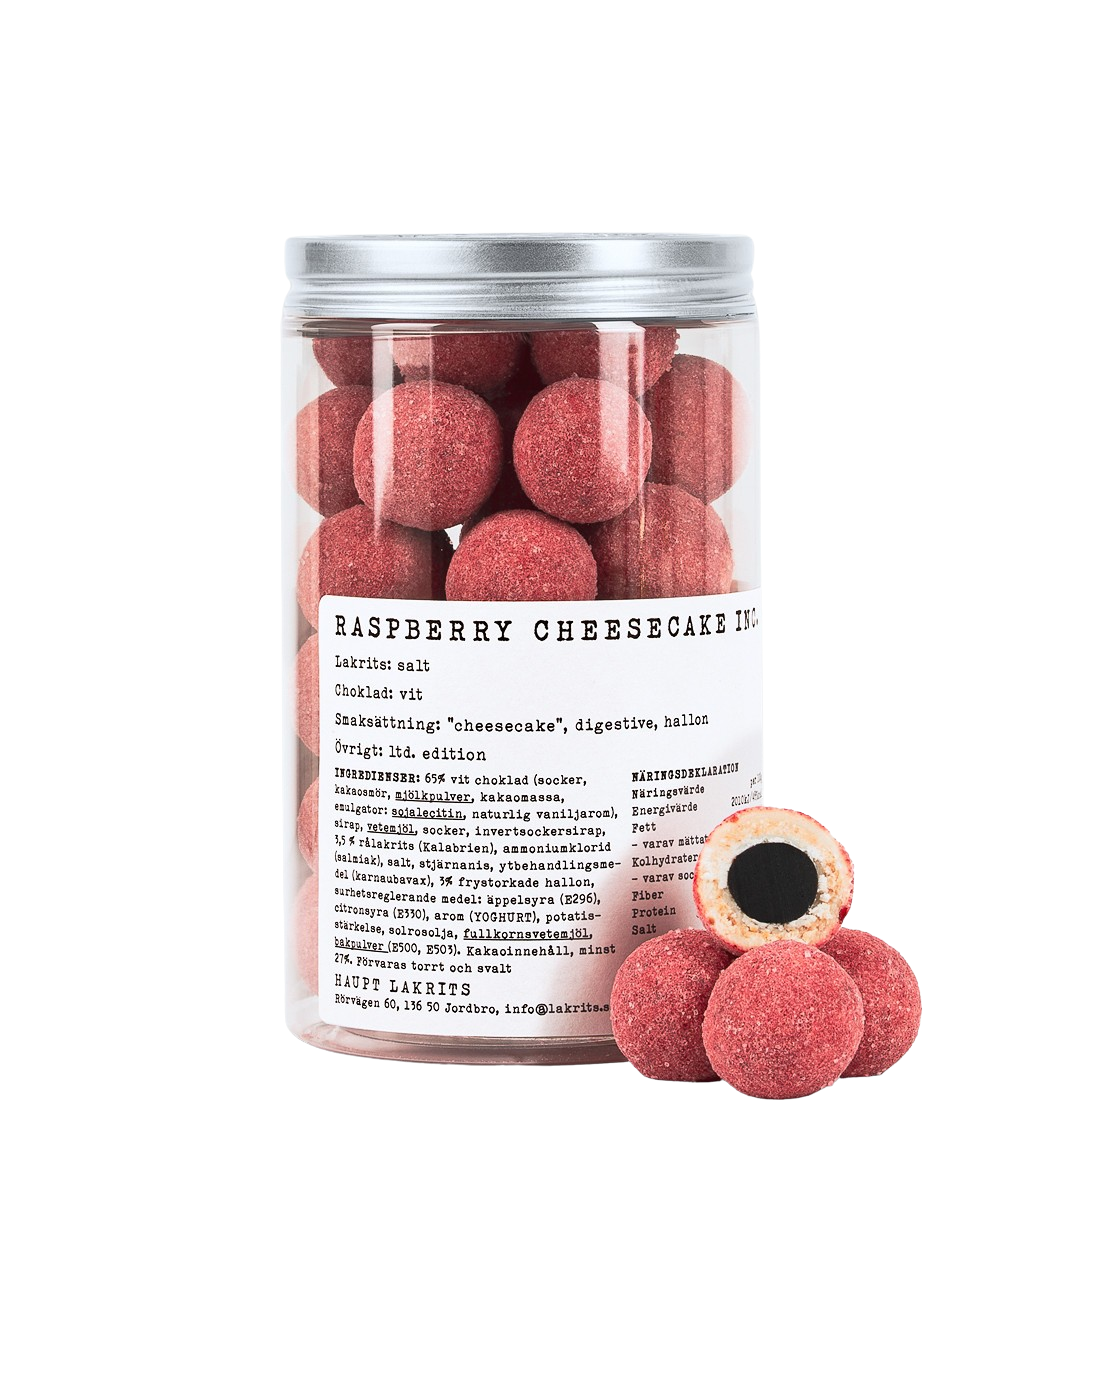 HAUPT LAKRITS Raspberry Cheesecake Inc 250g